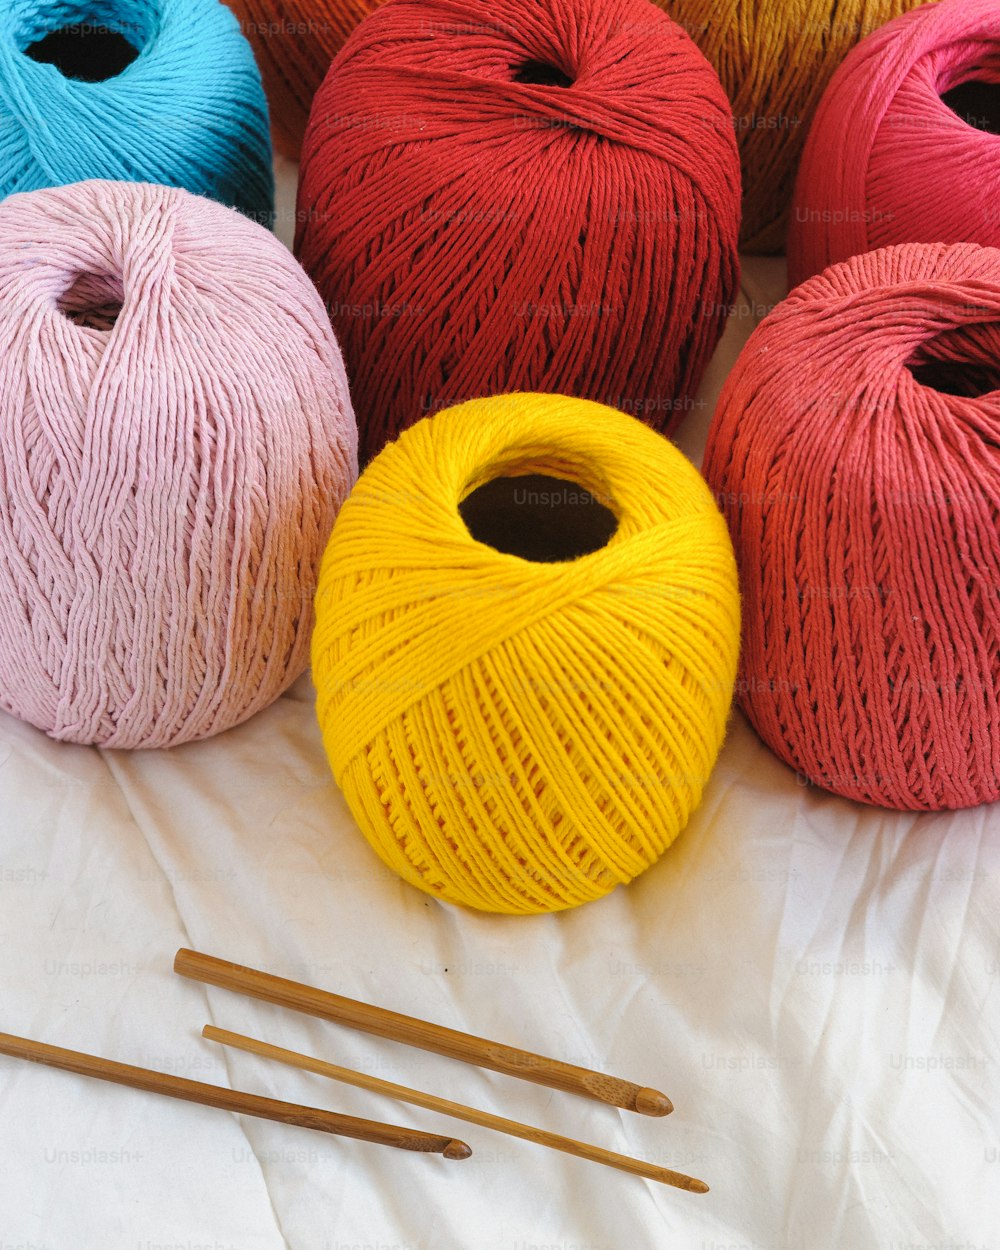 Set Colorful Wool Yarn Image & Photo (Free Trial)